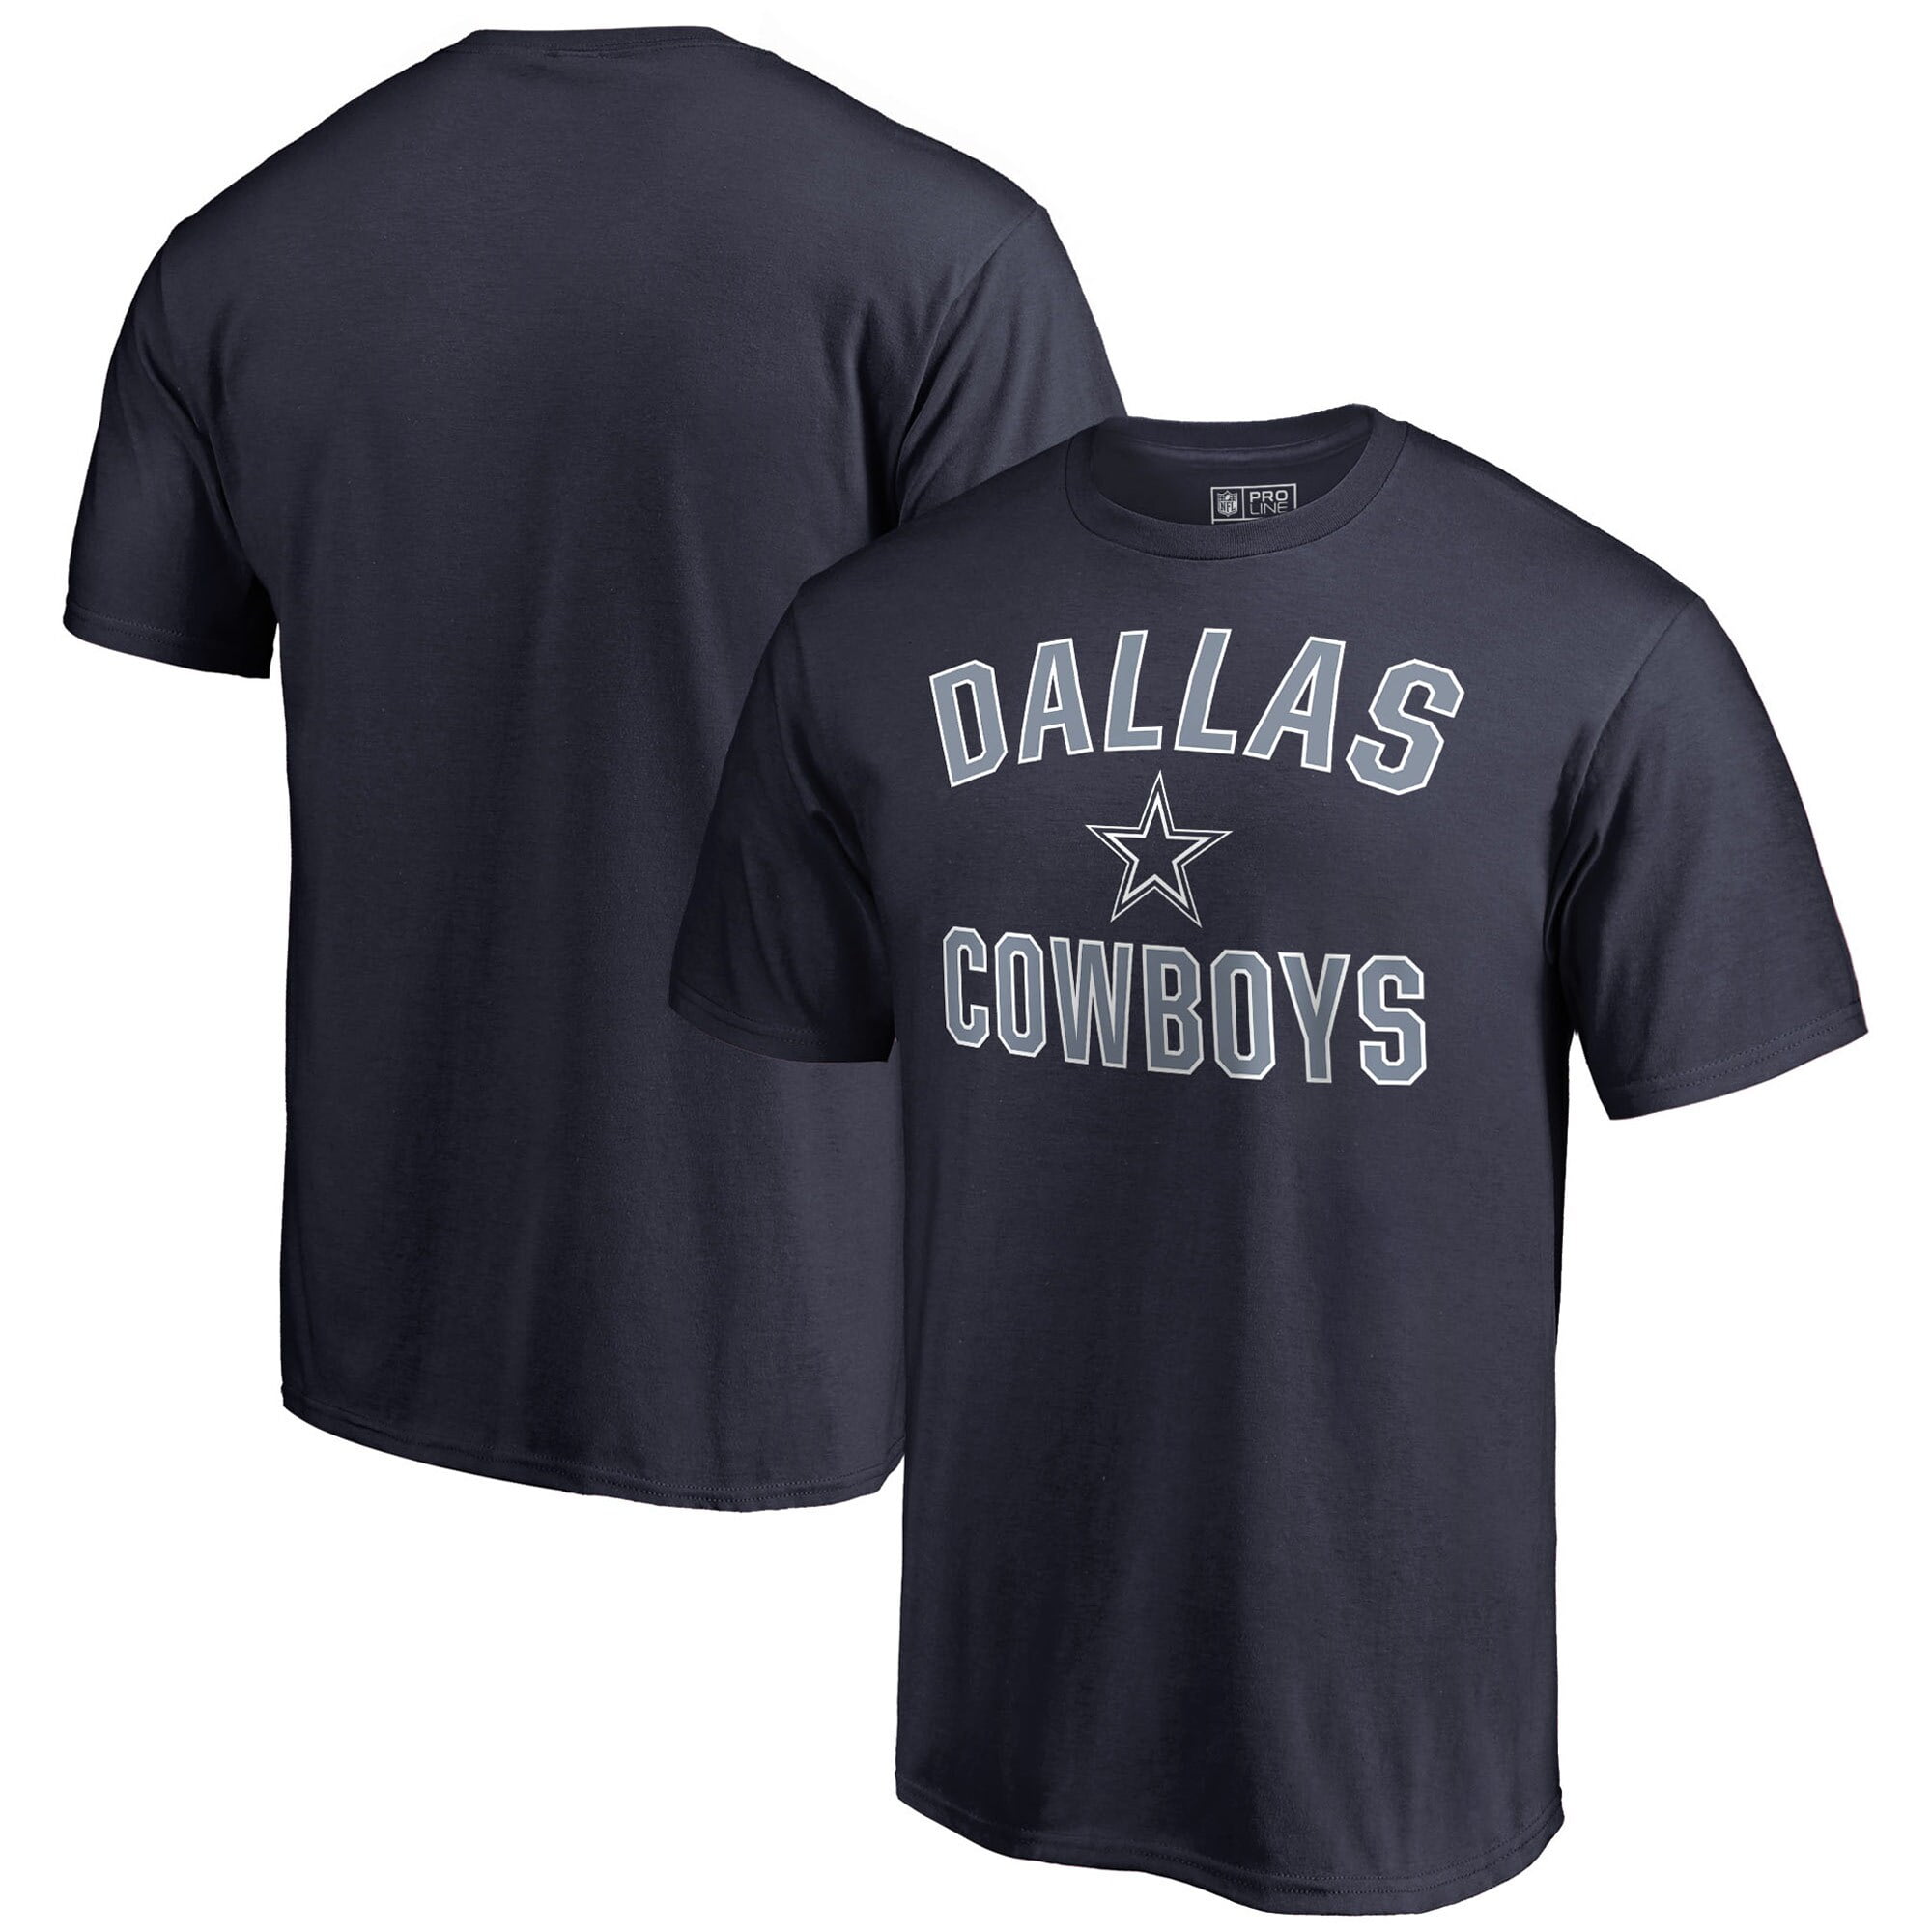 Dallas cowboys wordmark - sparkulsd